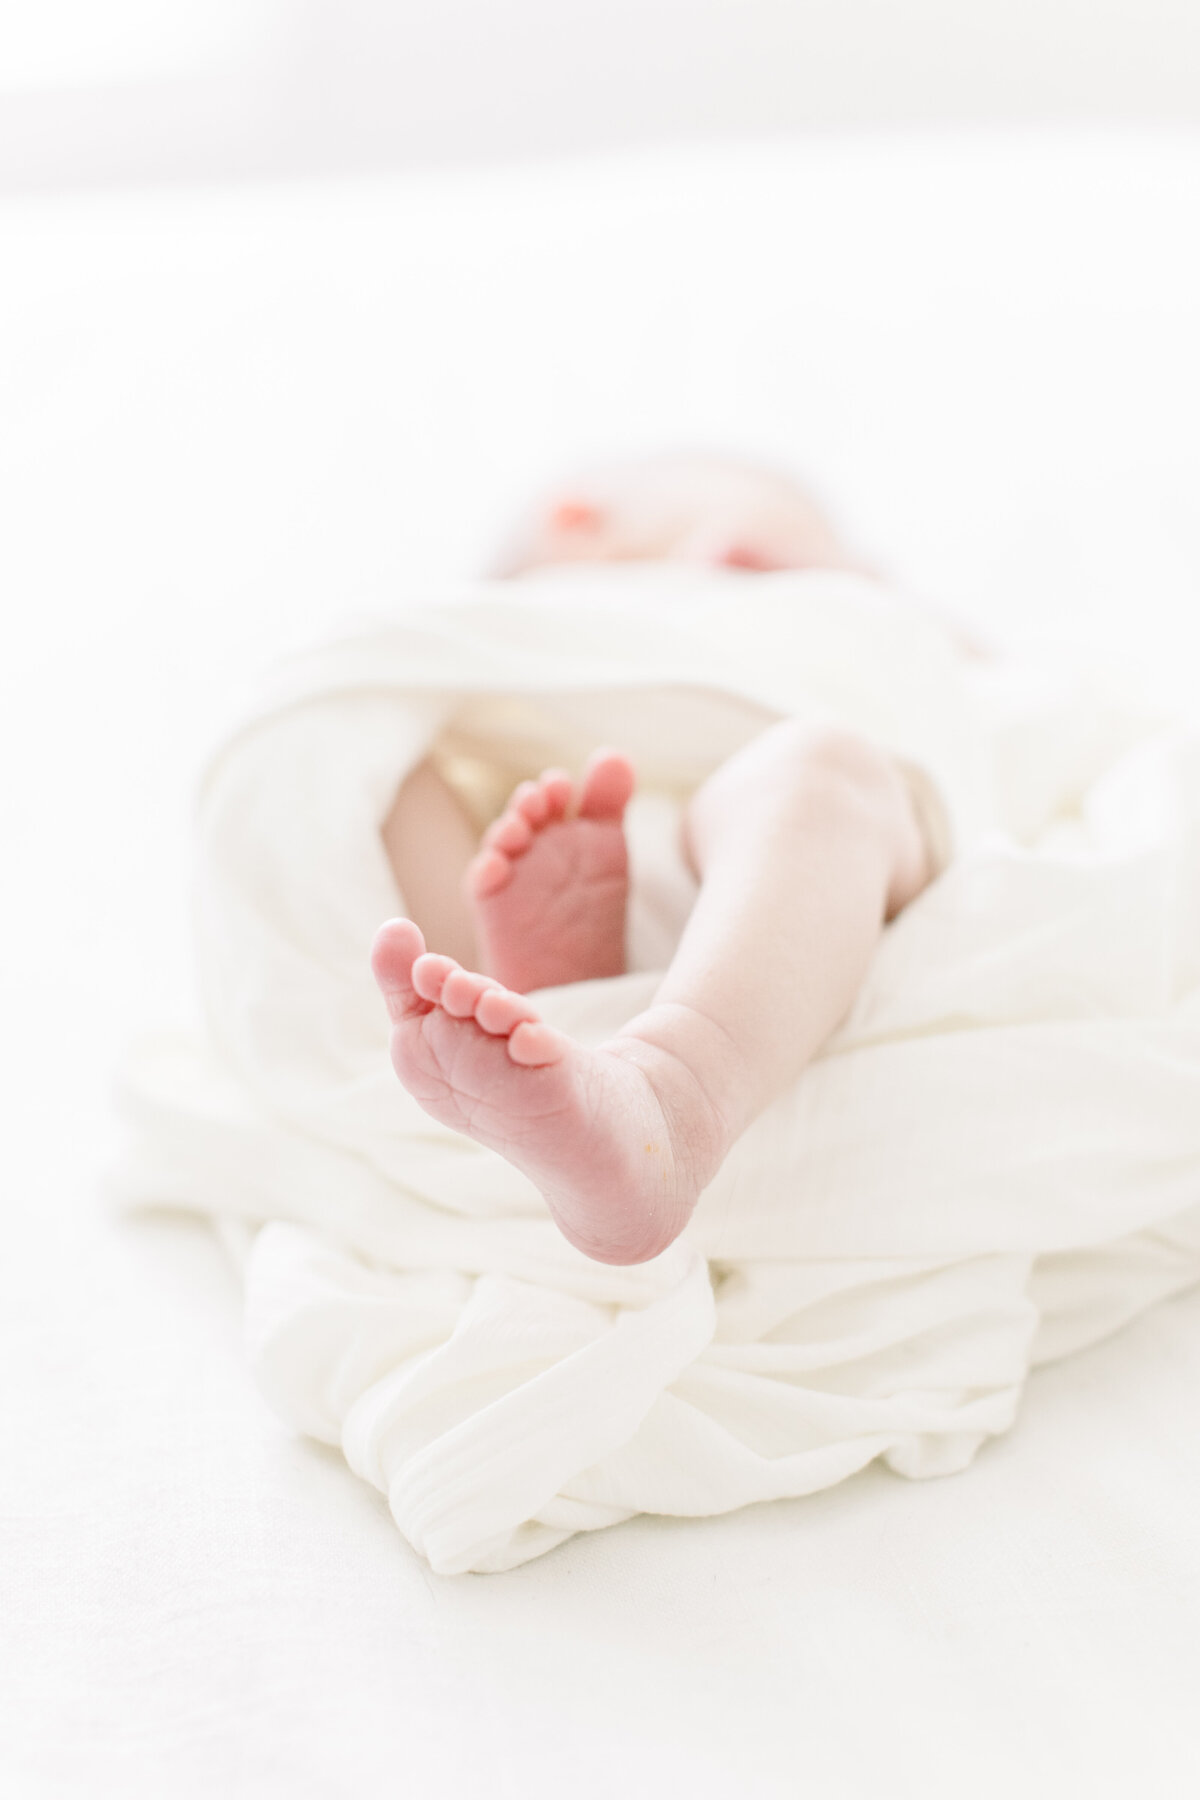 Baby Hannah  Crawford Newborn-246